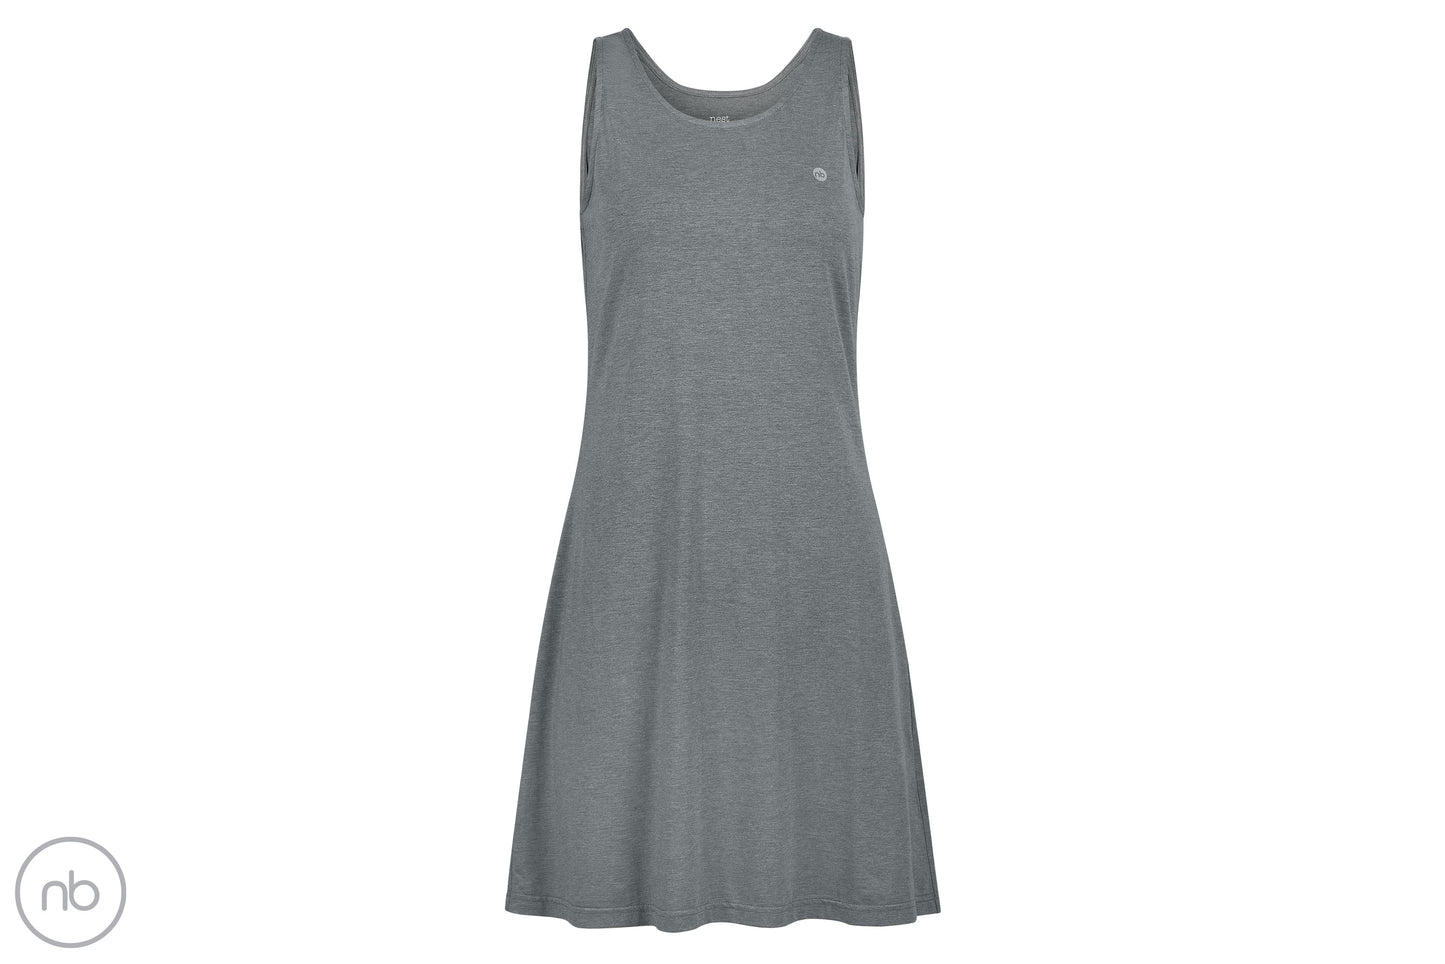 Basics Women's Sleeveless Dress (Bamboo) - Charcoal